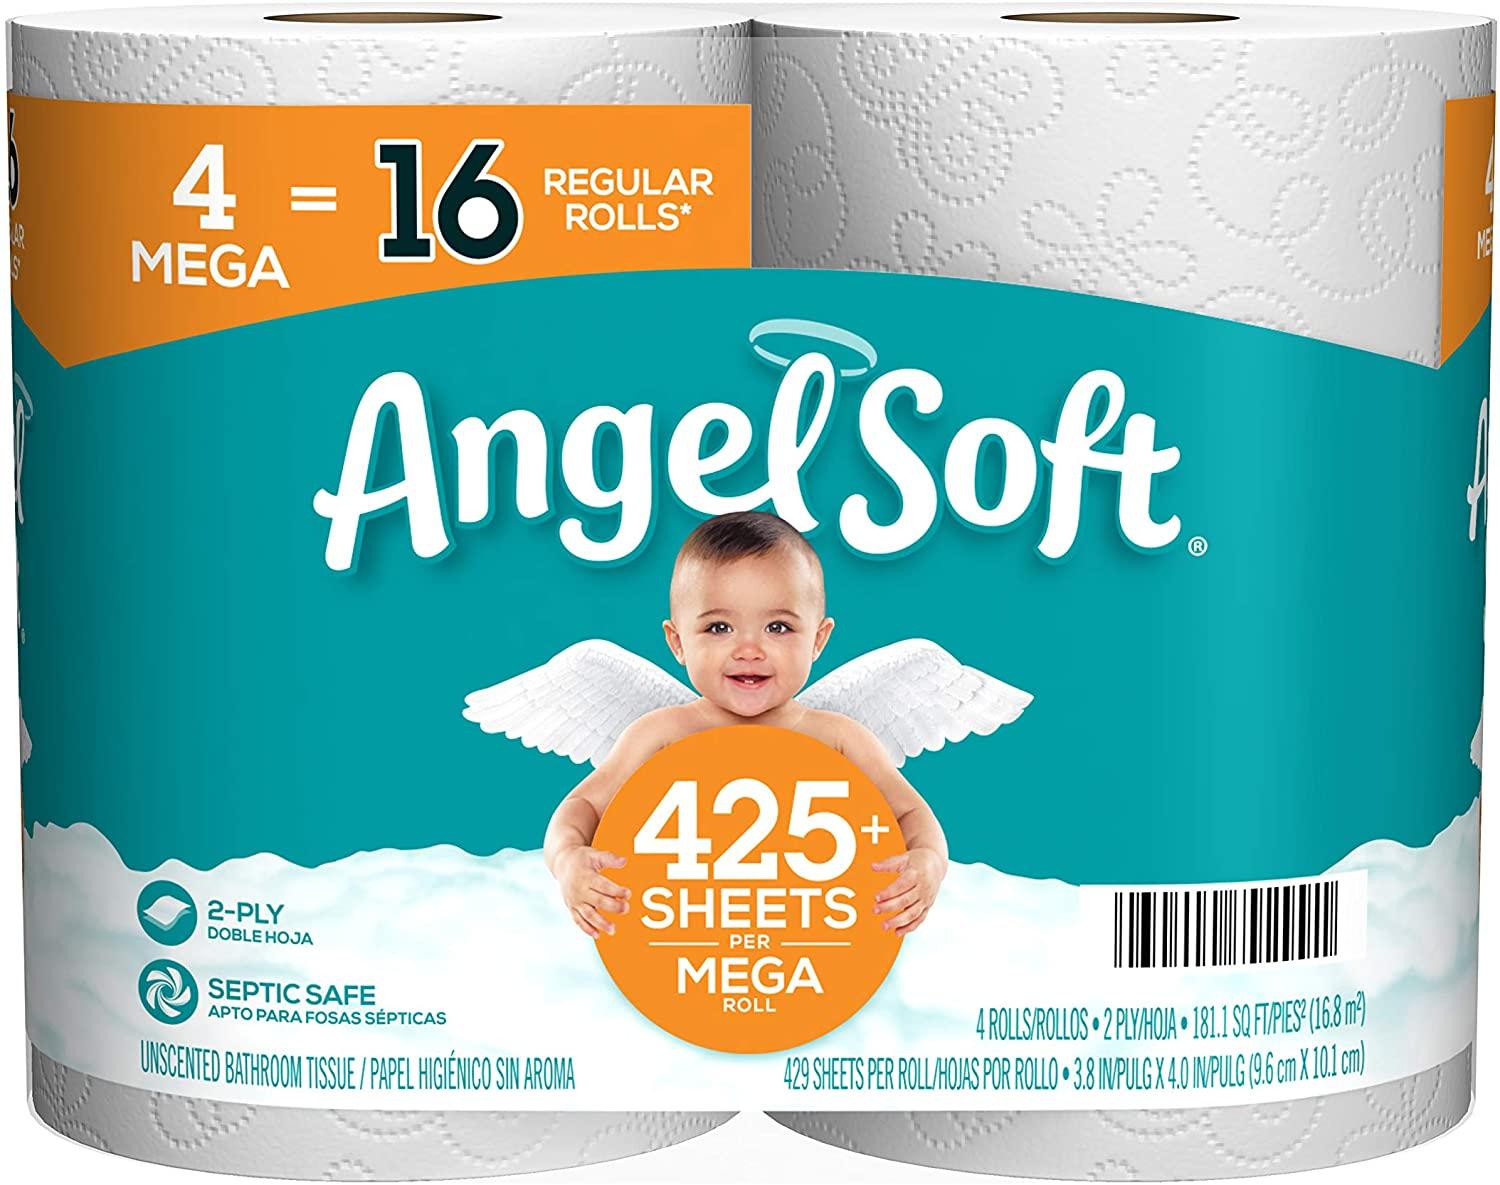 4 Angel Soft Mega Rolls Toilet Paper Bath Tissue Rolls for $3.18